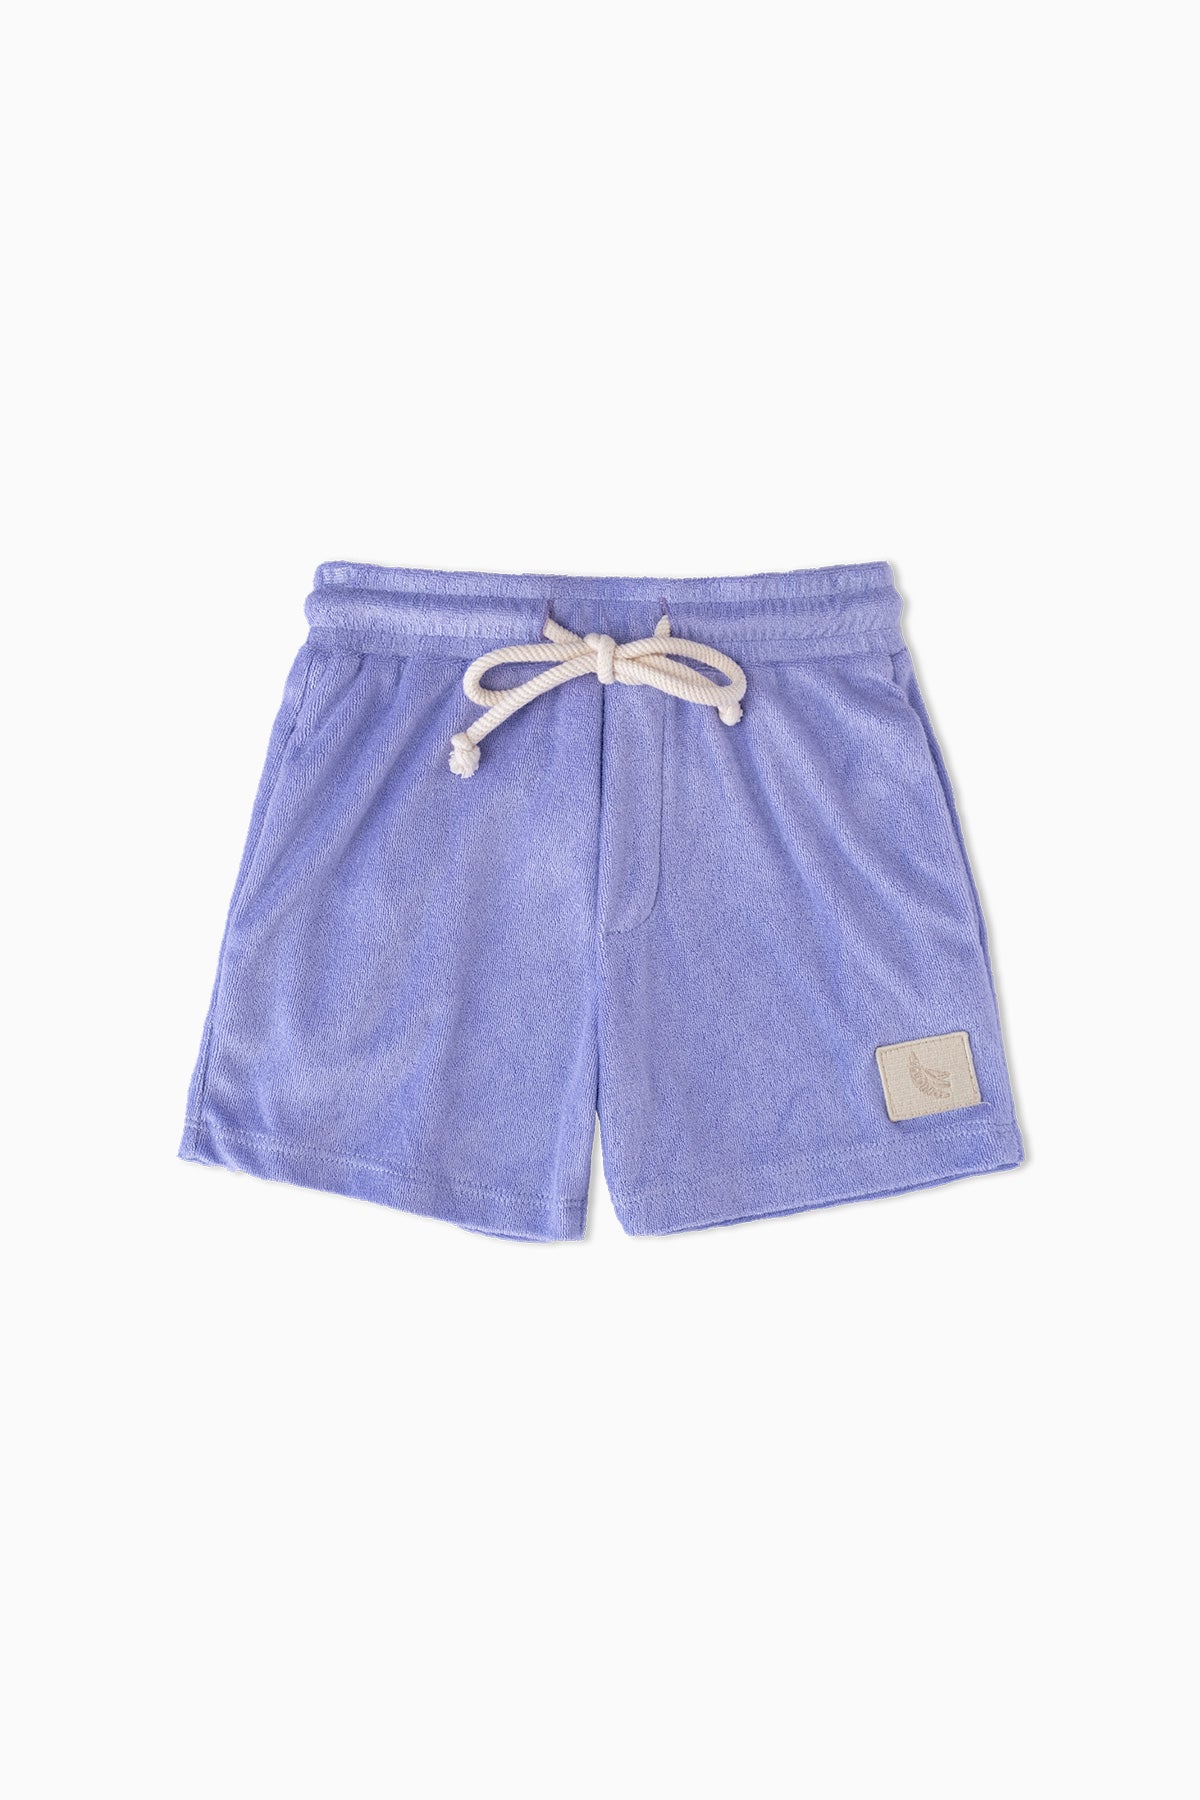 Lavender Terry Kids Shorts - Polonio